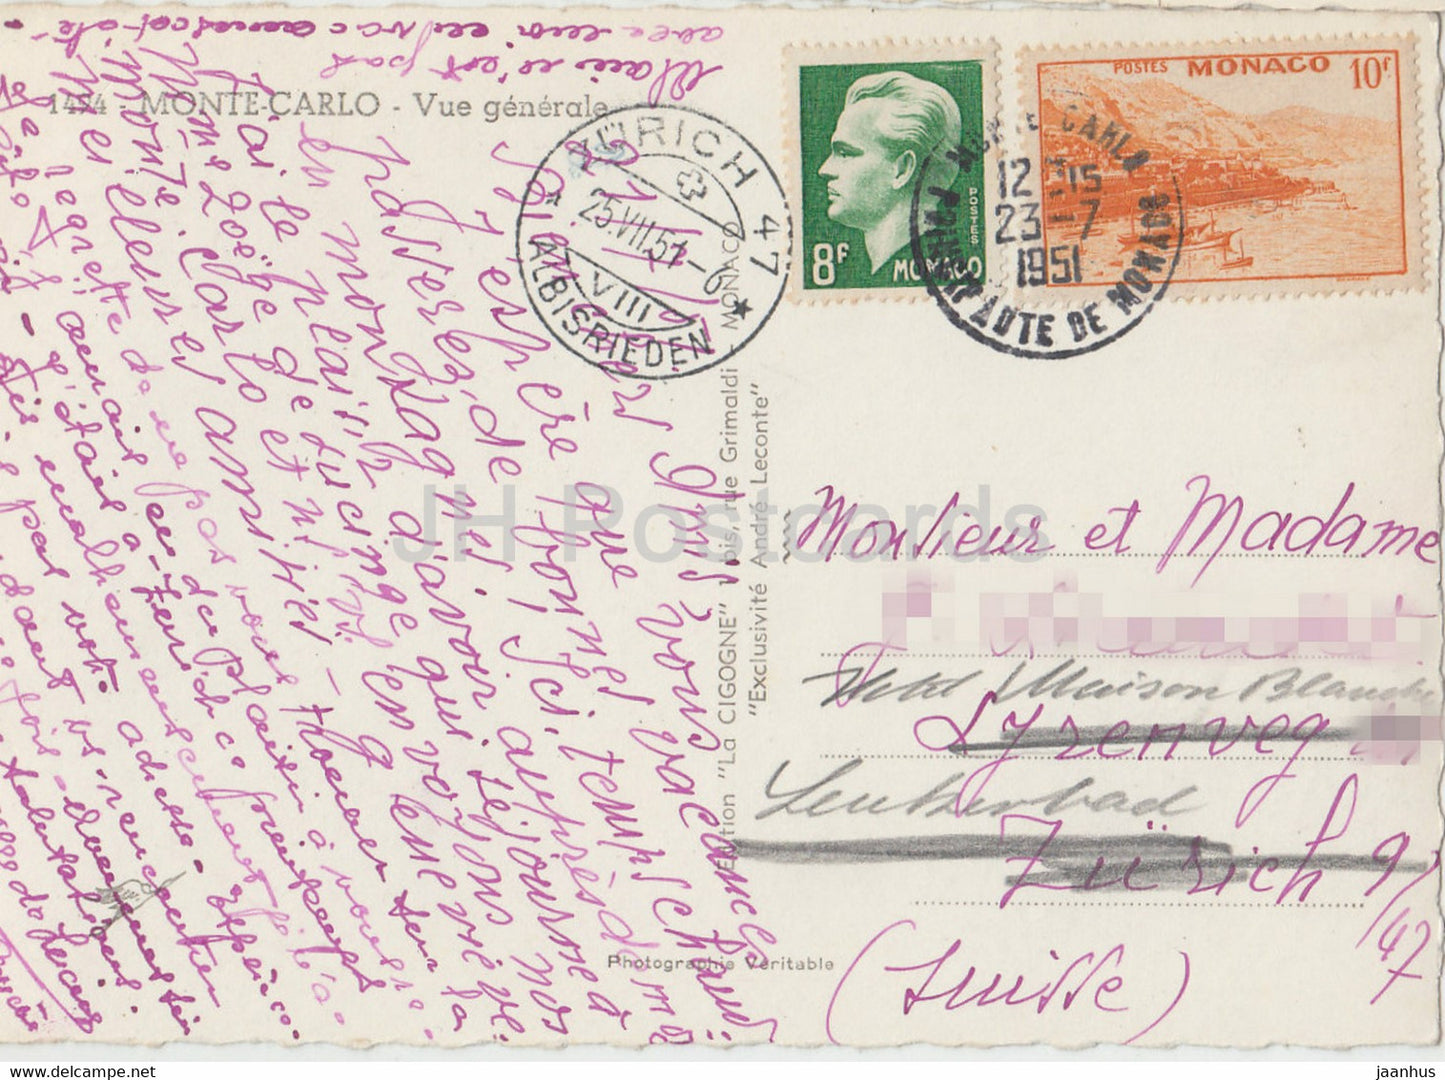 Monte Carlo - Vue Generale - 1494 - alte Postkarte - 1951 - Monaco - gebraucht